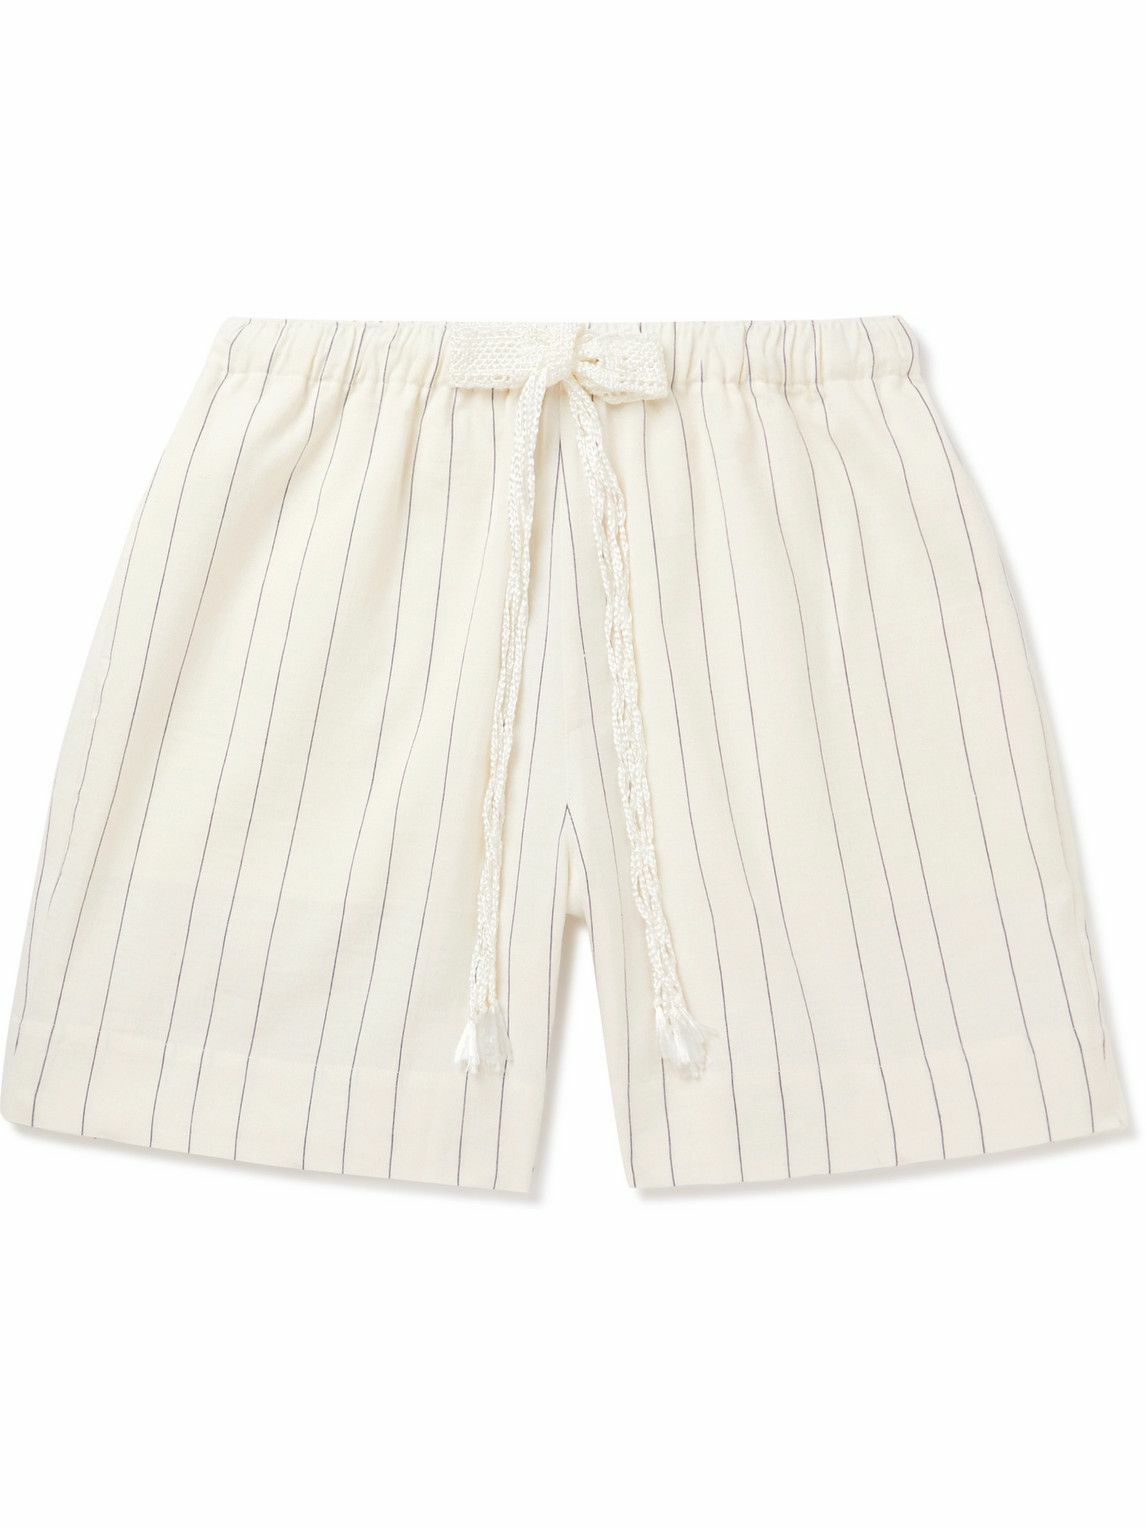 Photo: Wales Bonner - Straight-Leg Striped Linen and Cotton-Blend Drawstring Shorts - White